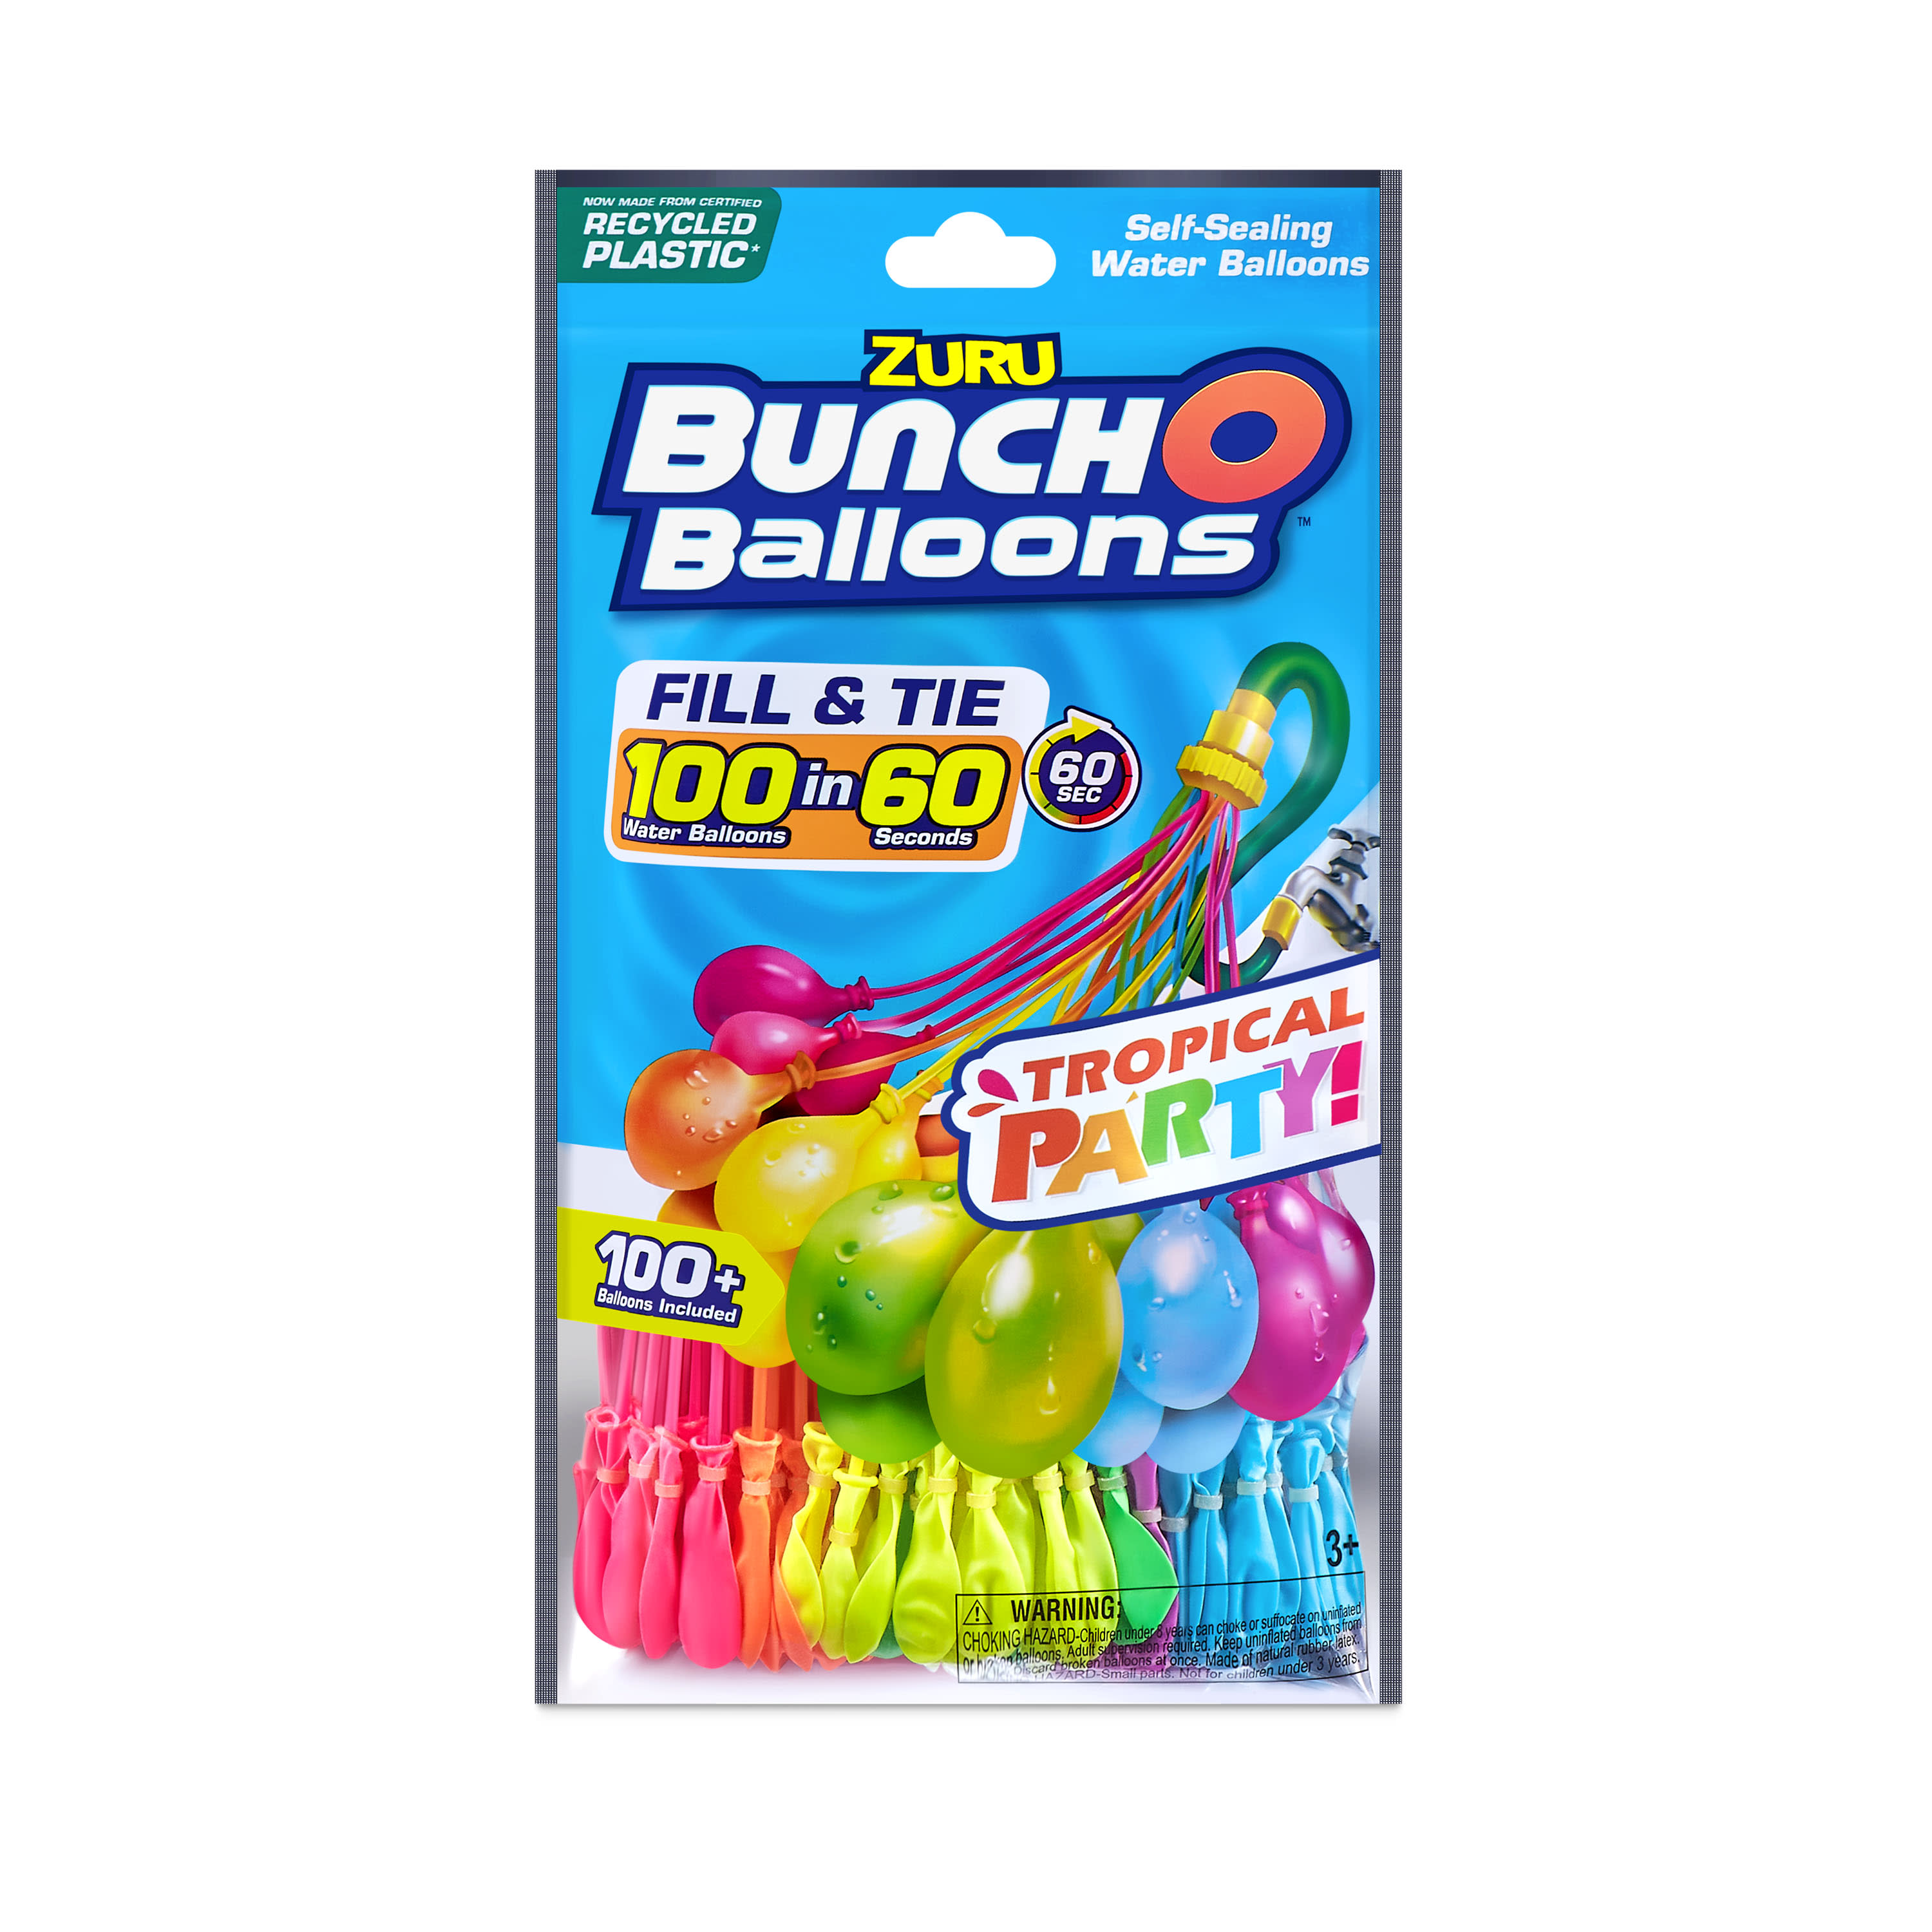 ZURU Bunch O Balloons 3 Pack Tropical